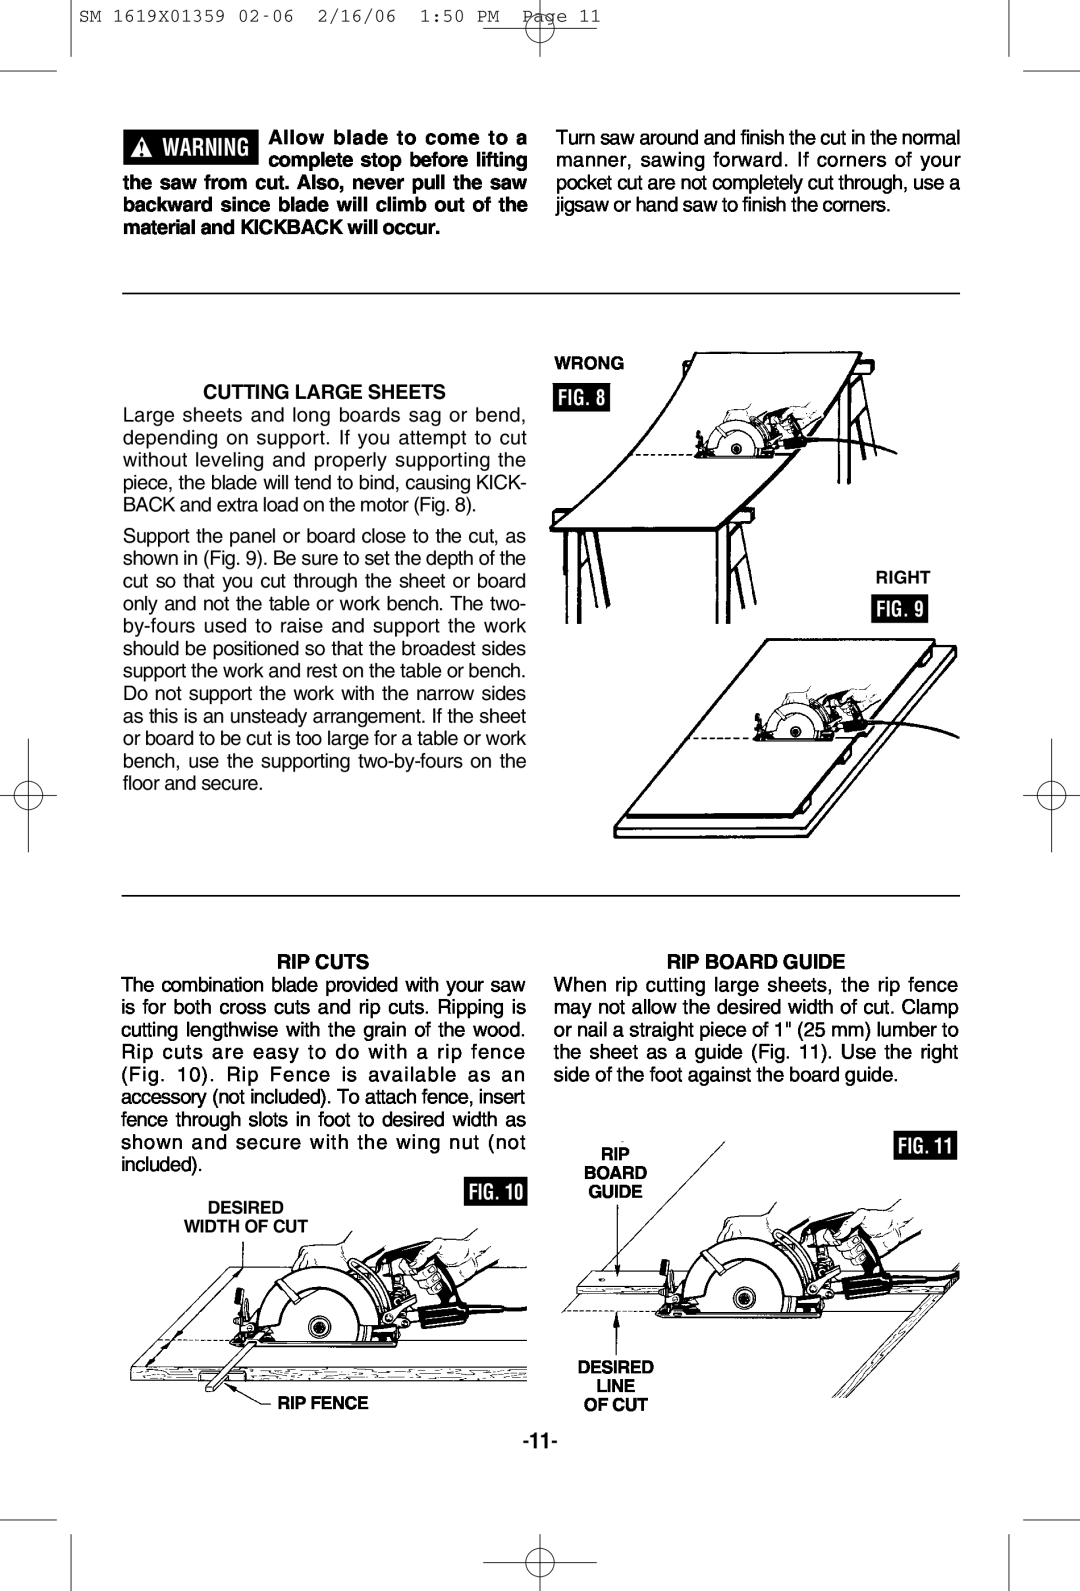 Skil HD5860 manual Cutting Large Sheets, Rip Cuts, Rip Board Guide, Fig 